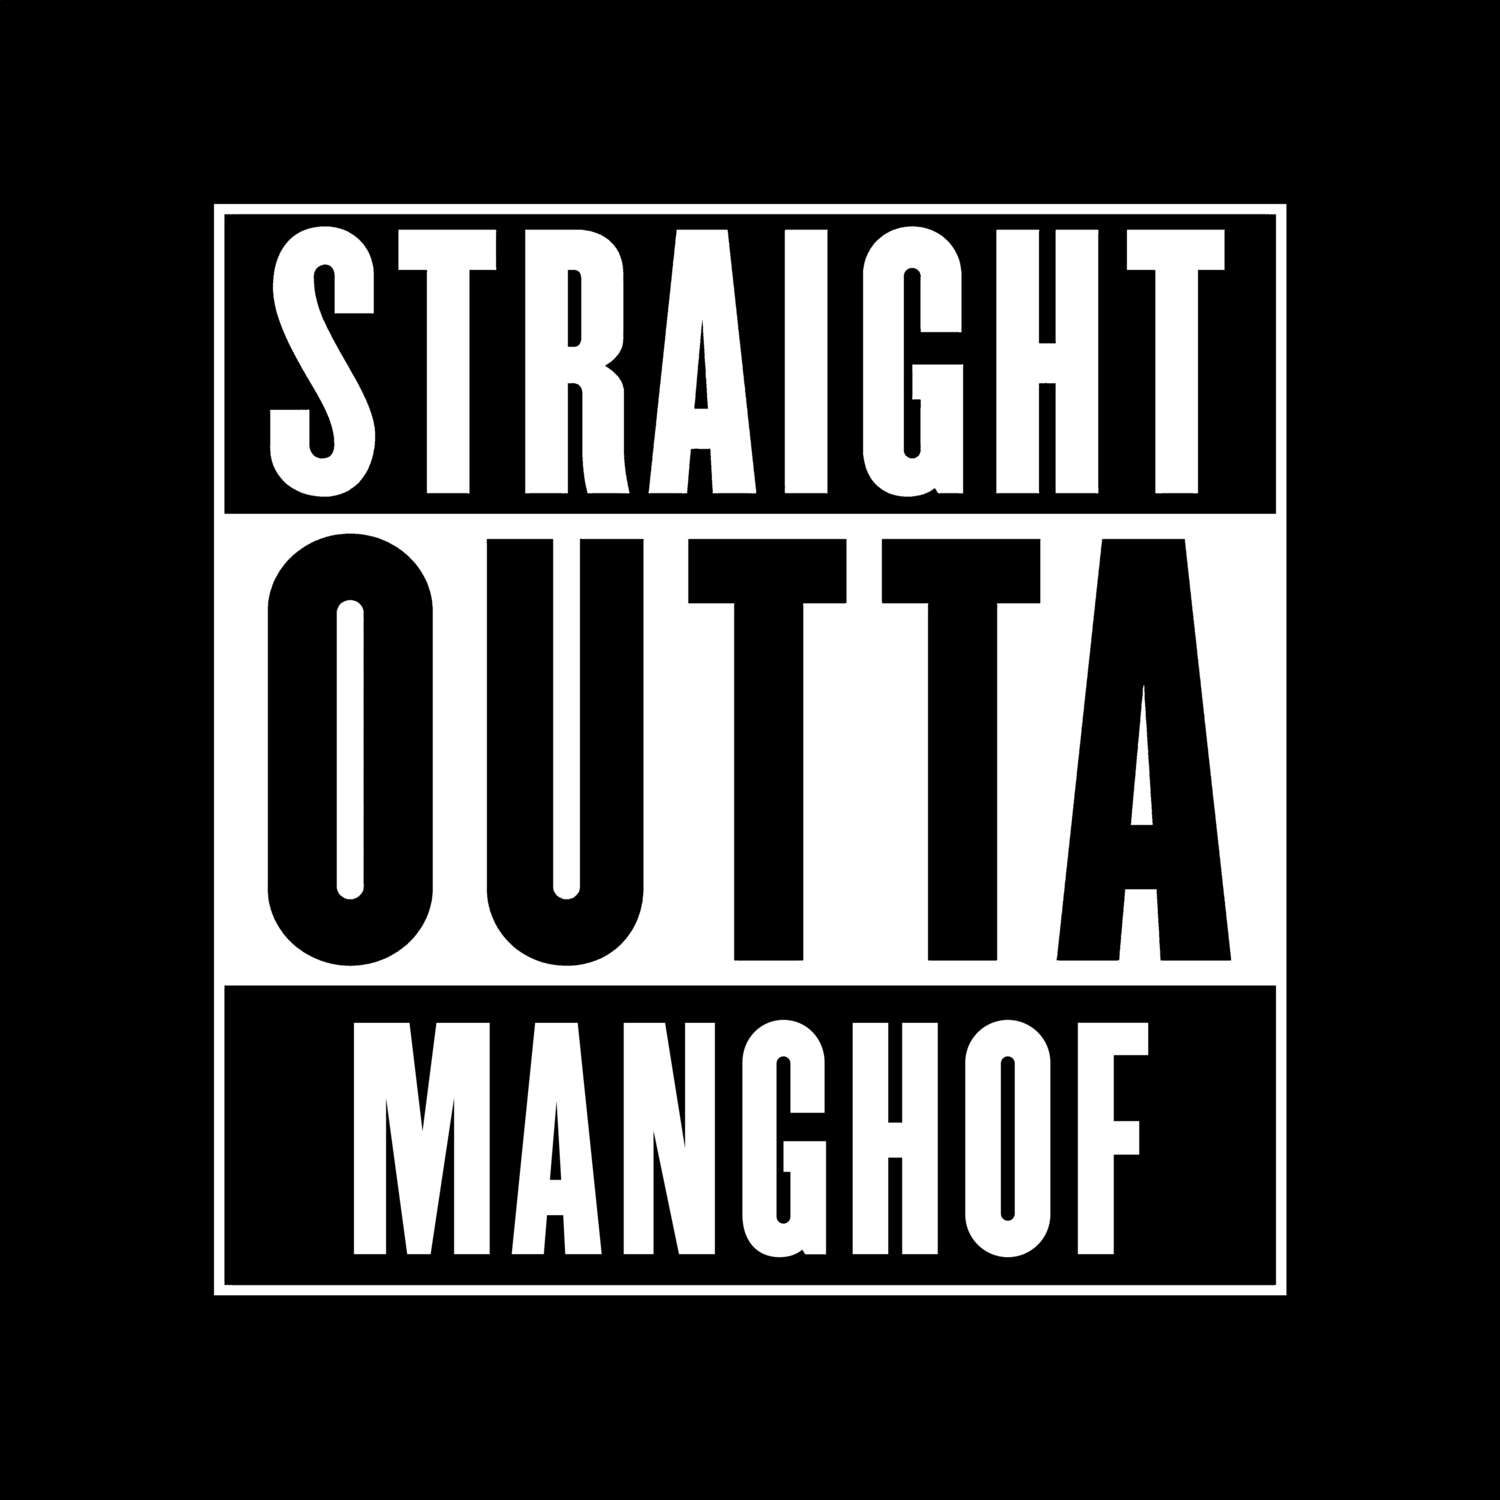 Manghof T-Shirt »Straight Outta«